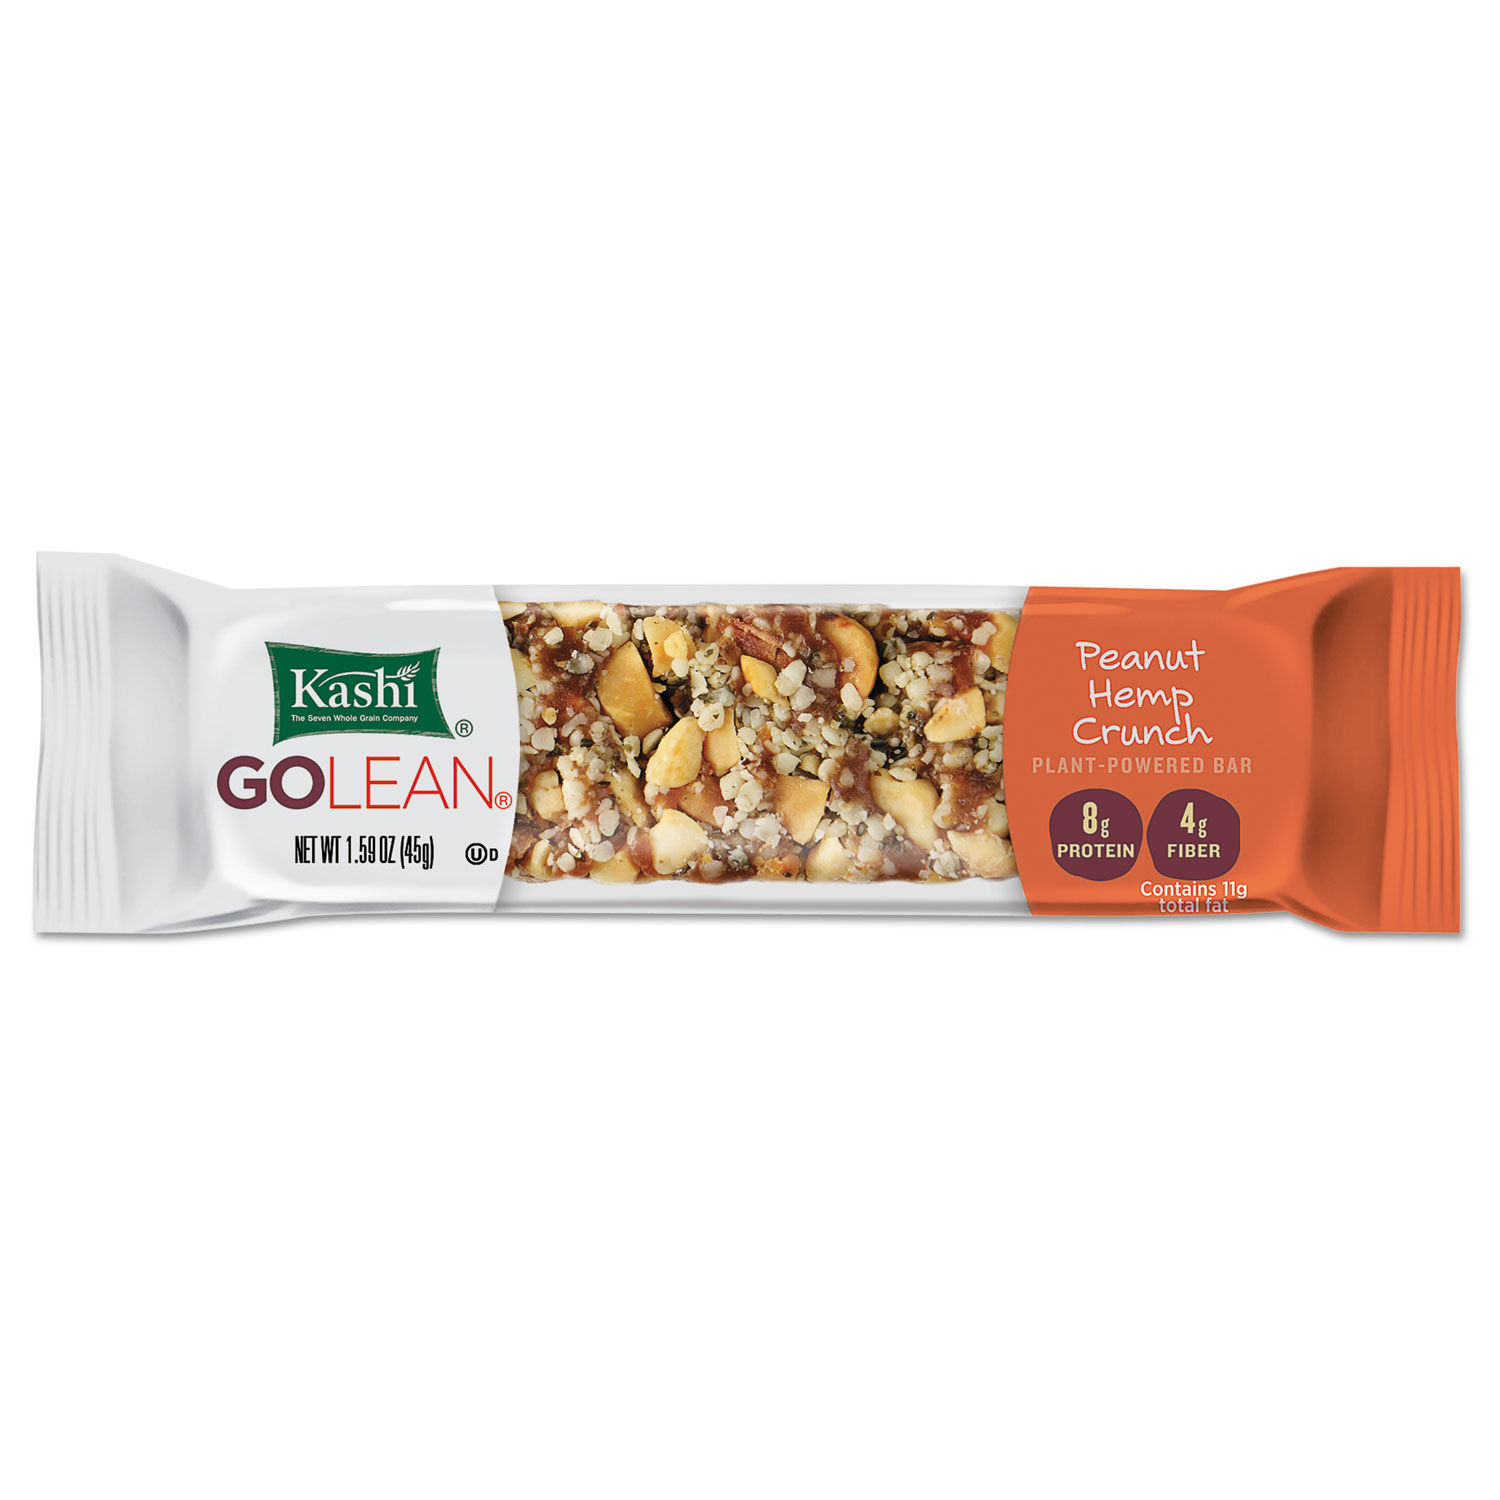 GOLEAN Fiber & Protein Bars, Peanut Hemp Crunch, 1.58 oz Bar, 8/Box